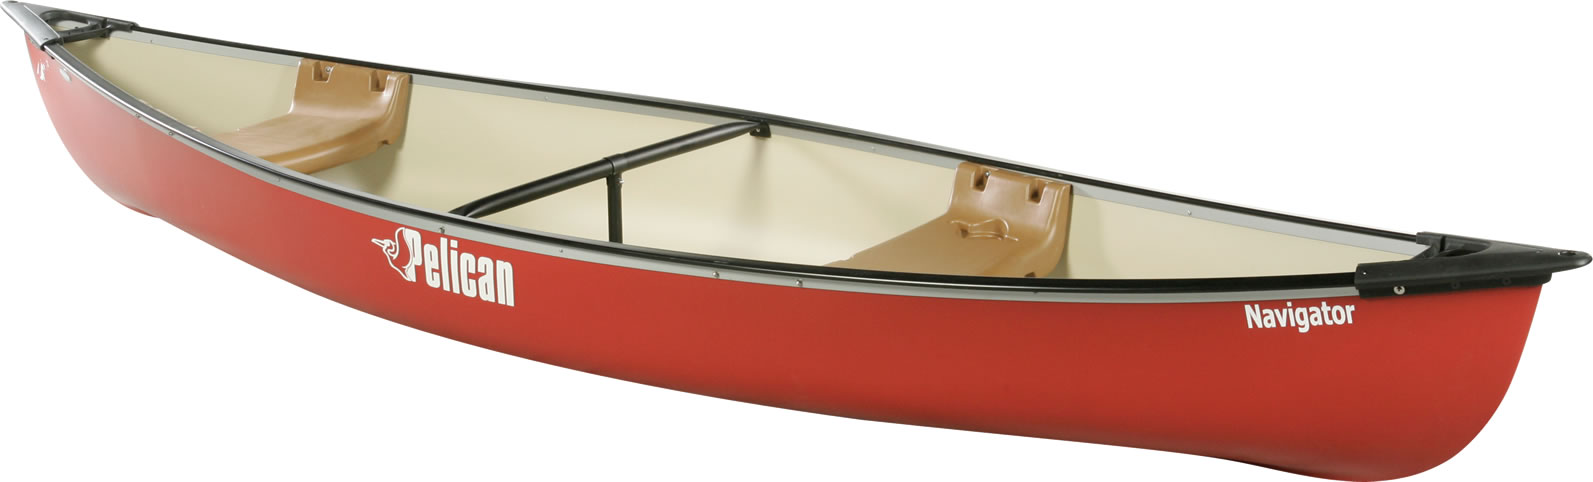 Pelican Navigator Canoe